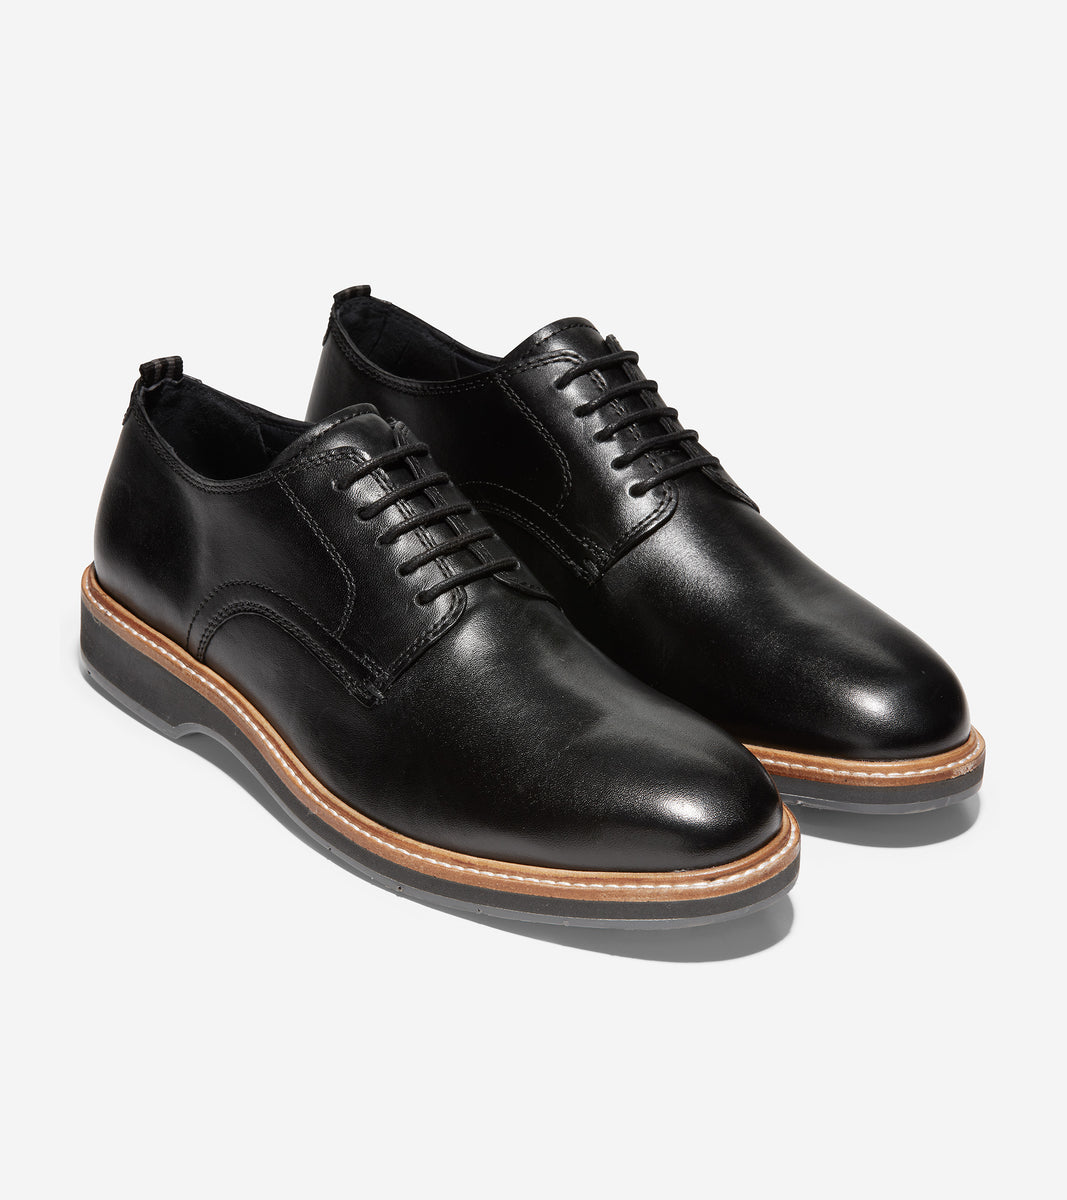 ColeHaan-Morris Plain Oxford-c31445-Black Smooth Leather